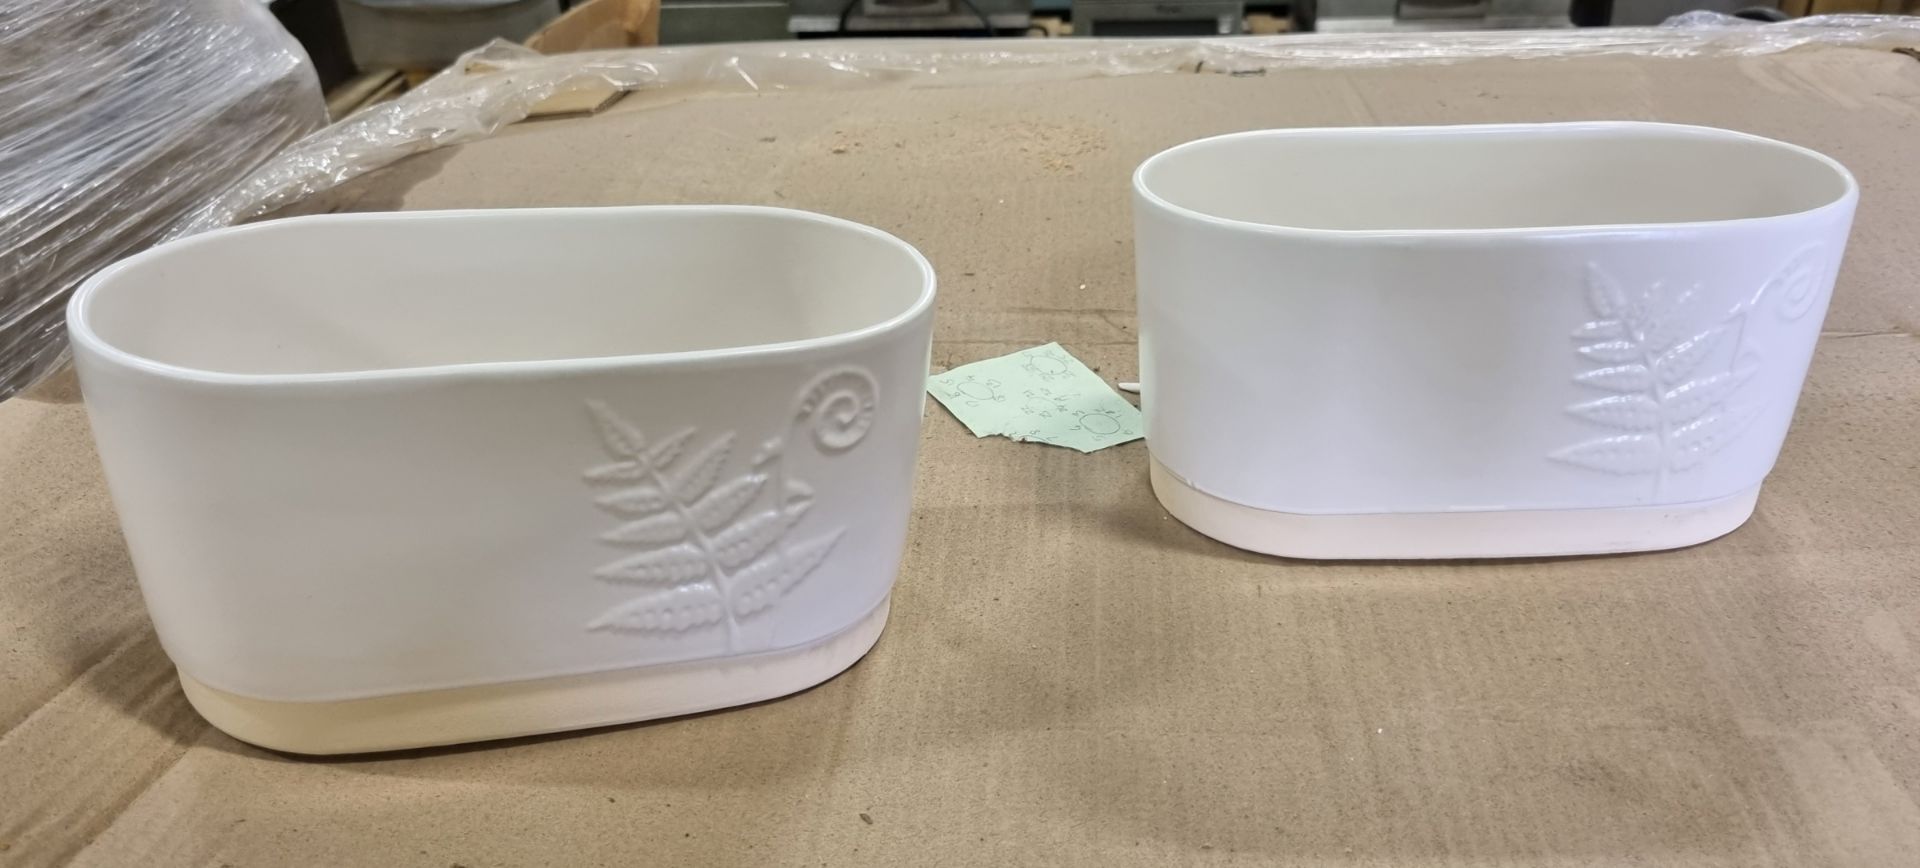 Approximately 250 white ceramic oval plant pots - on original pallet - SOME BROKEN - Image 2 of 3